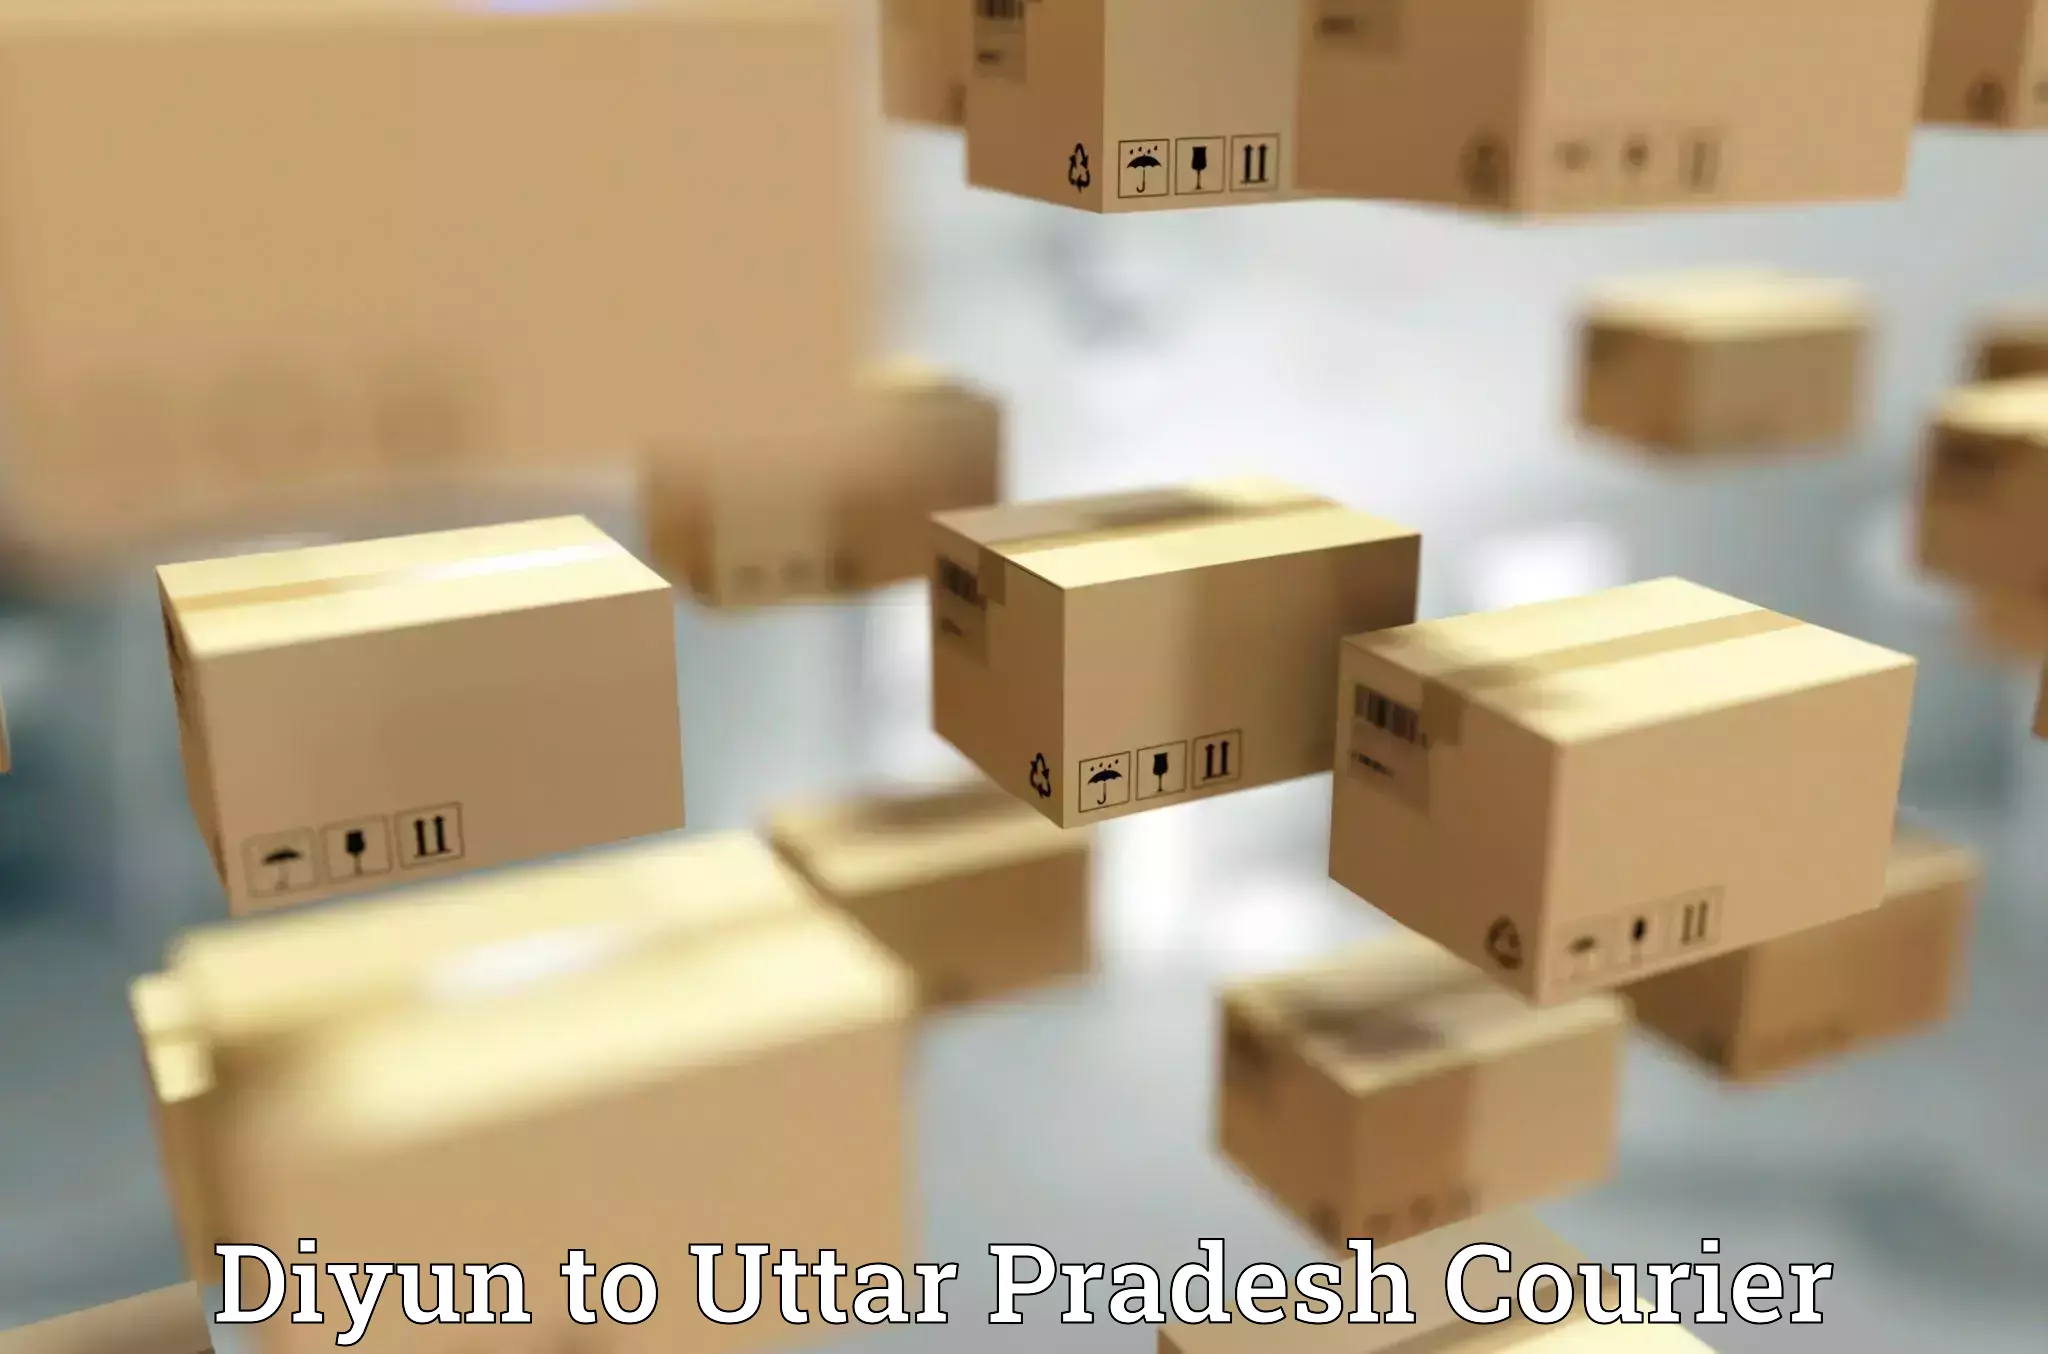 Baggage relocation service Diyun to Uttar Pradesh